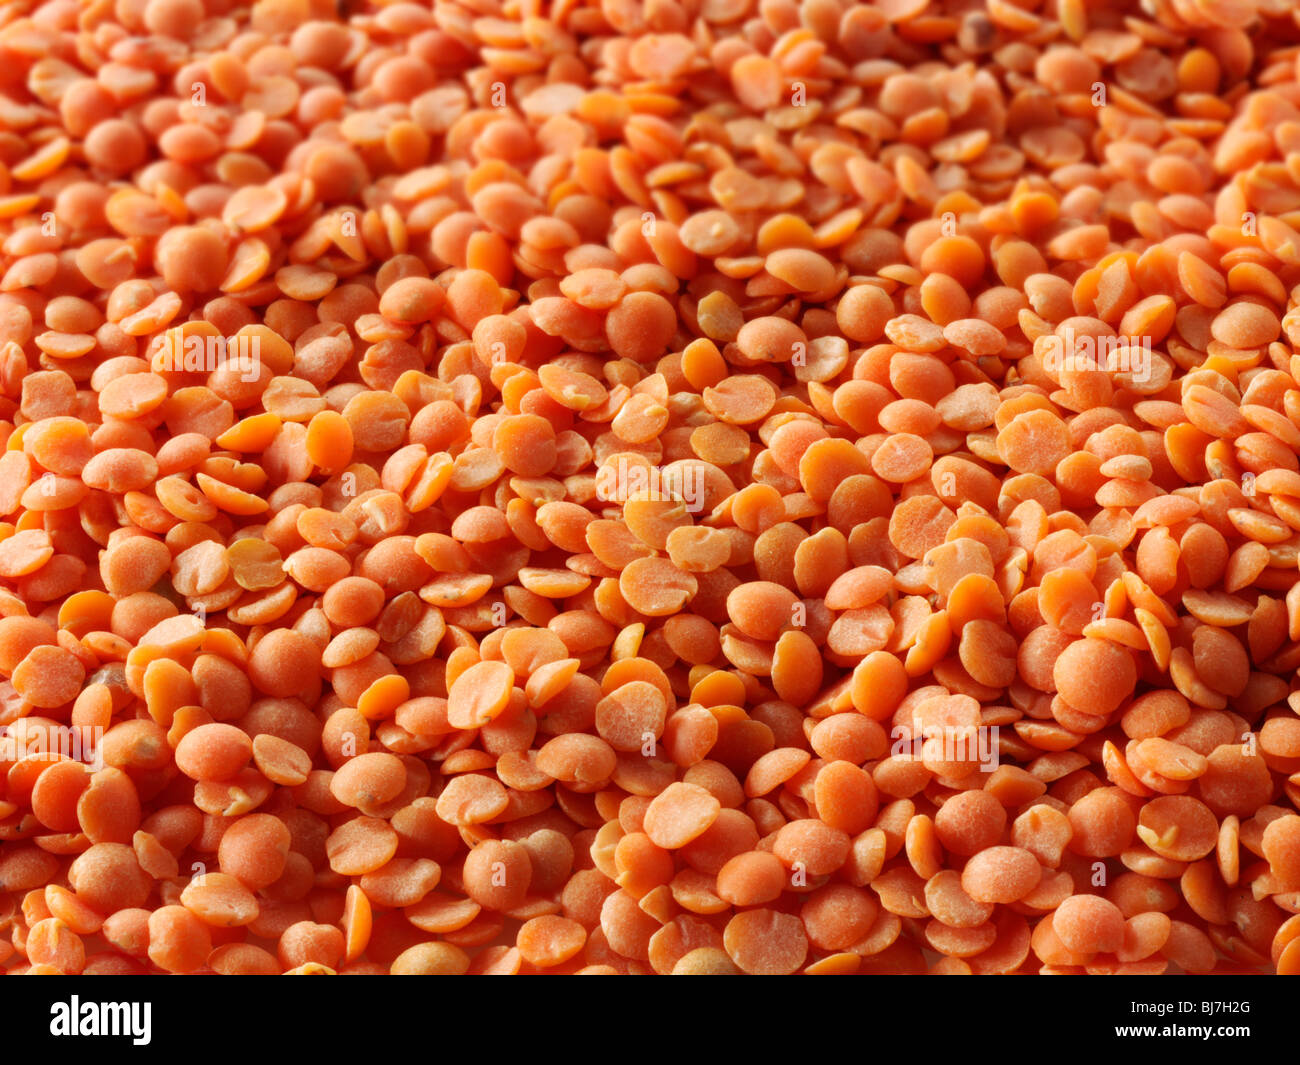 Whole dried orange lentil beans - close up full frame top shot. Stock Photo